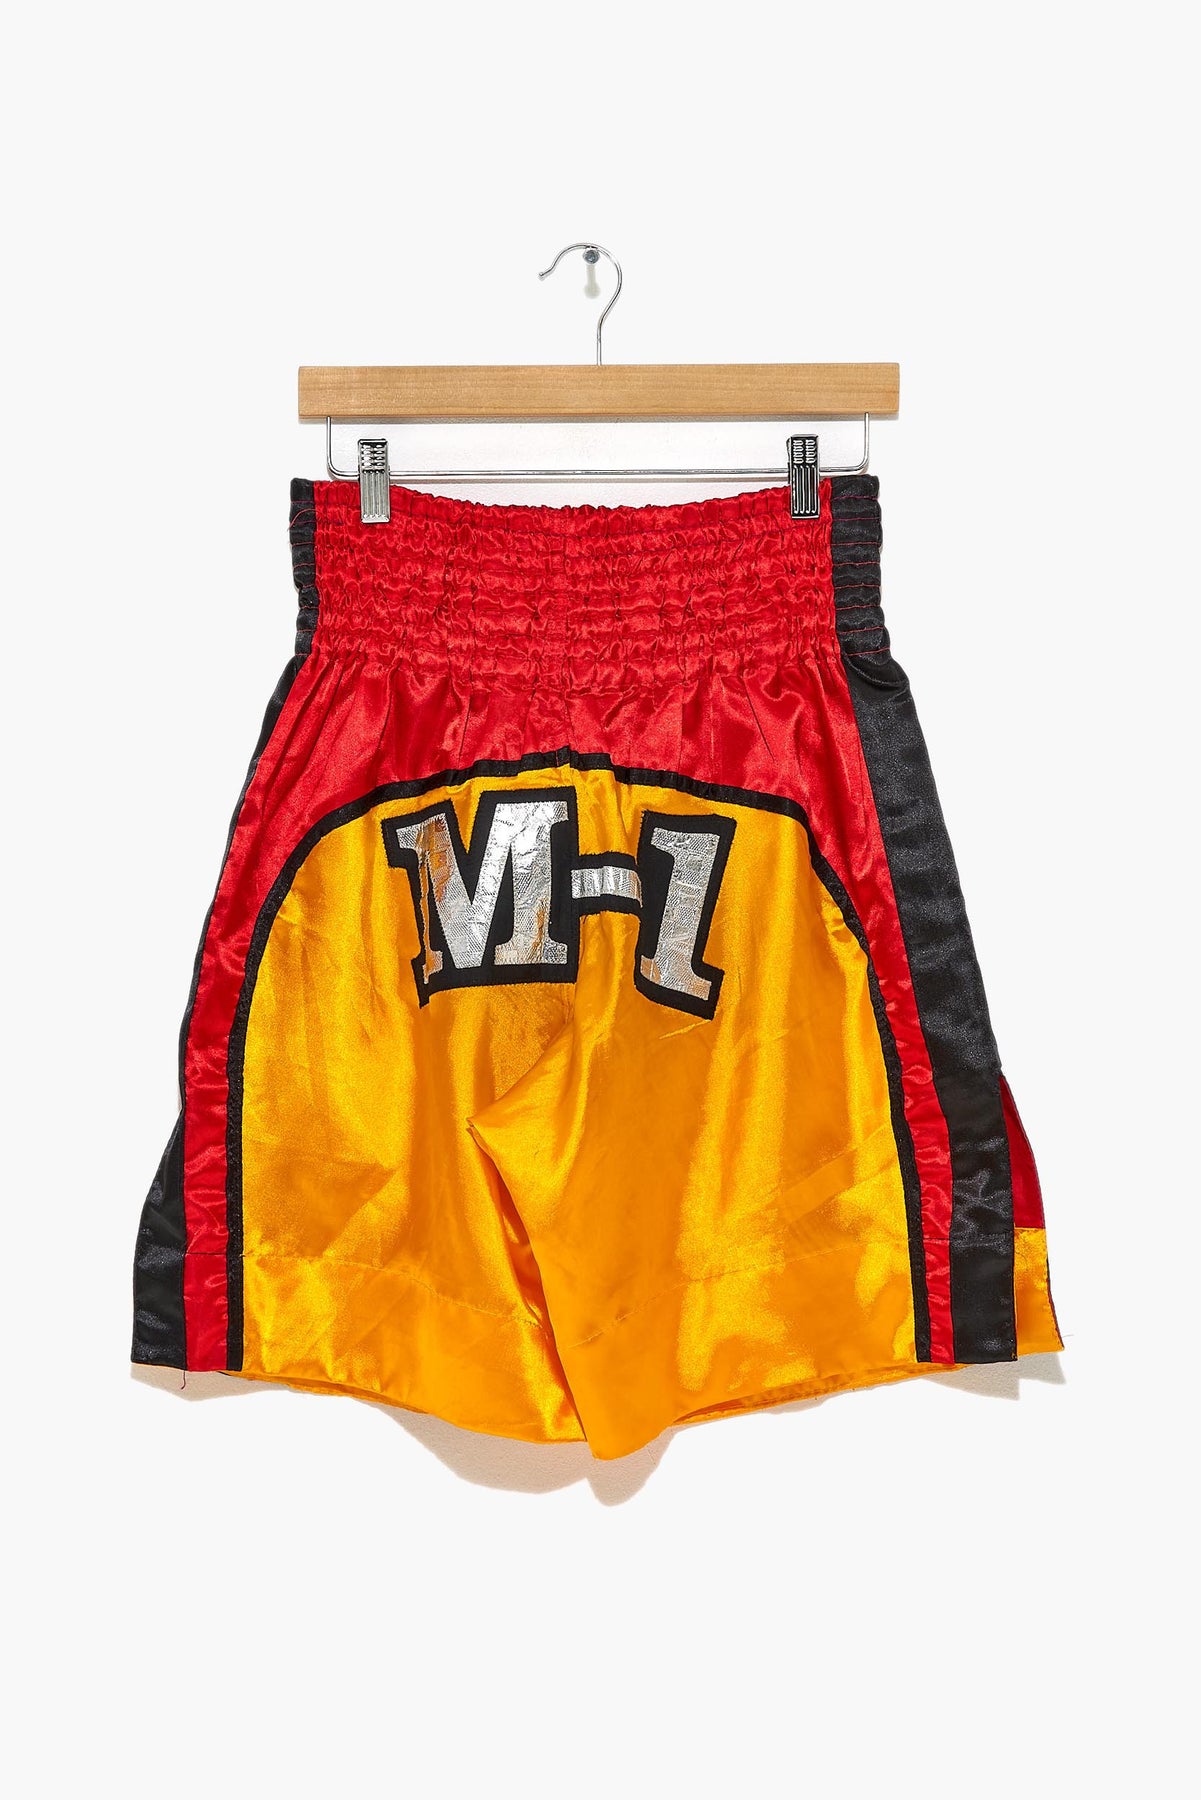 m1 adidas shorts